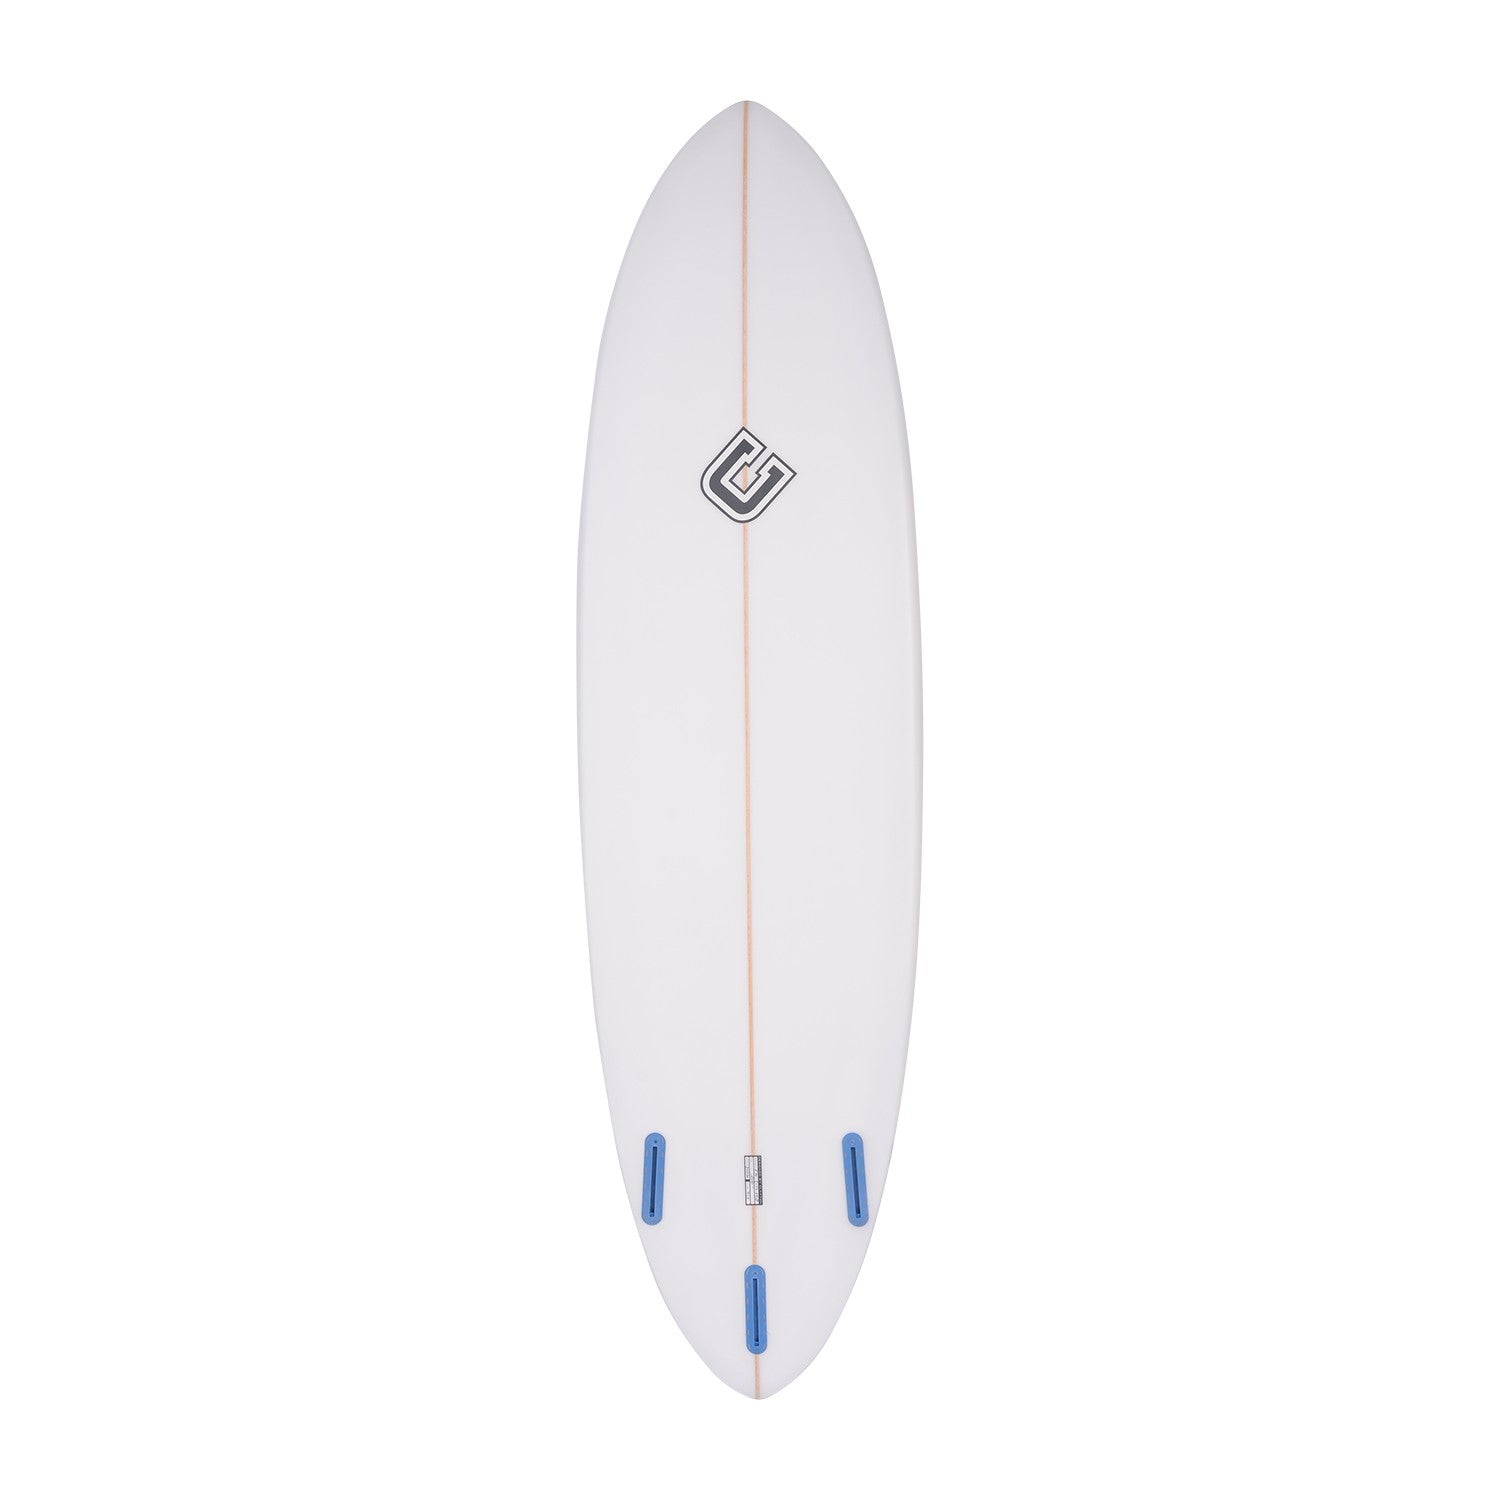 CLAYTON Surfboards - Evo - Futures (PU) - 7'4